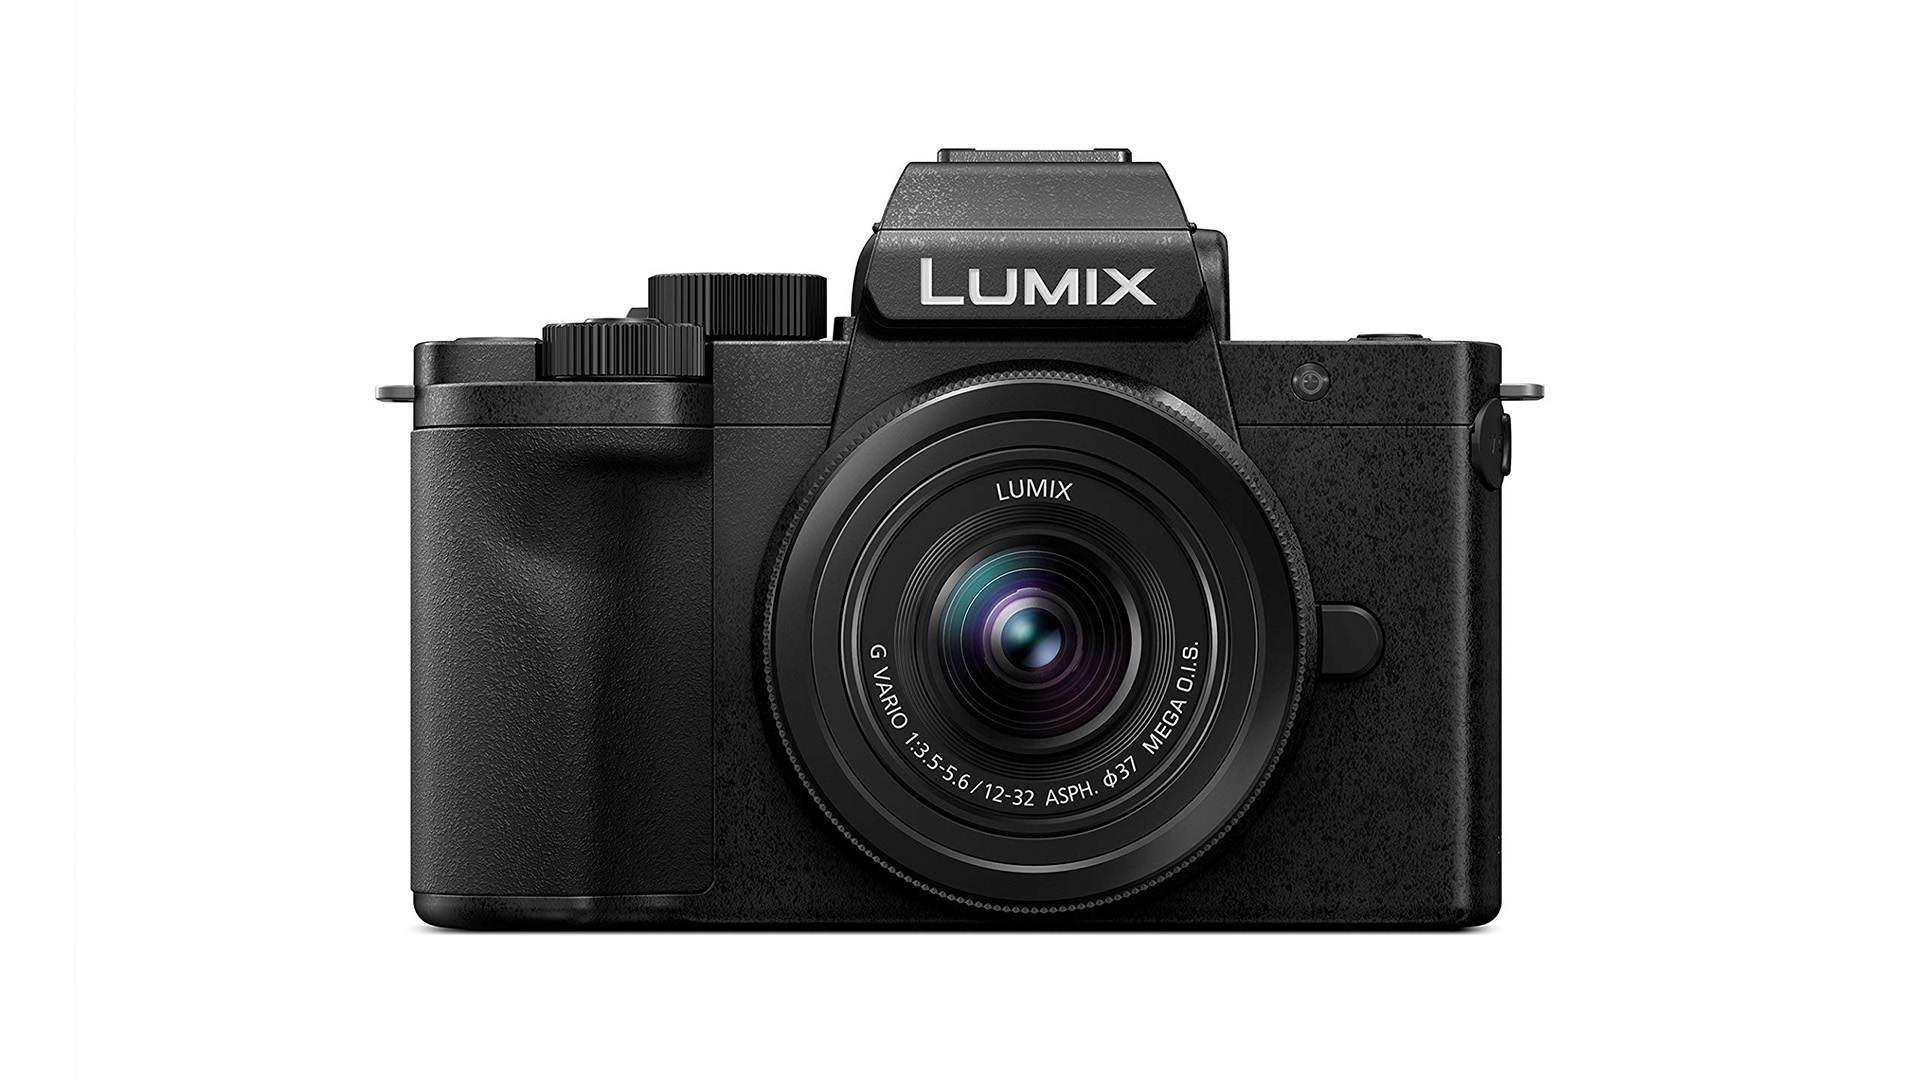 Save $250 on the Panasonic Lumix G100 camera this holiday season